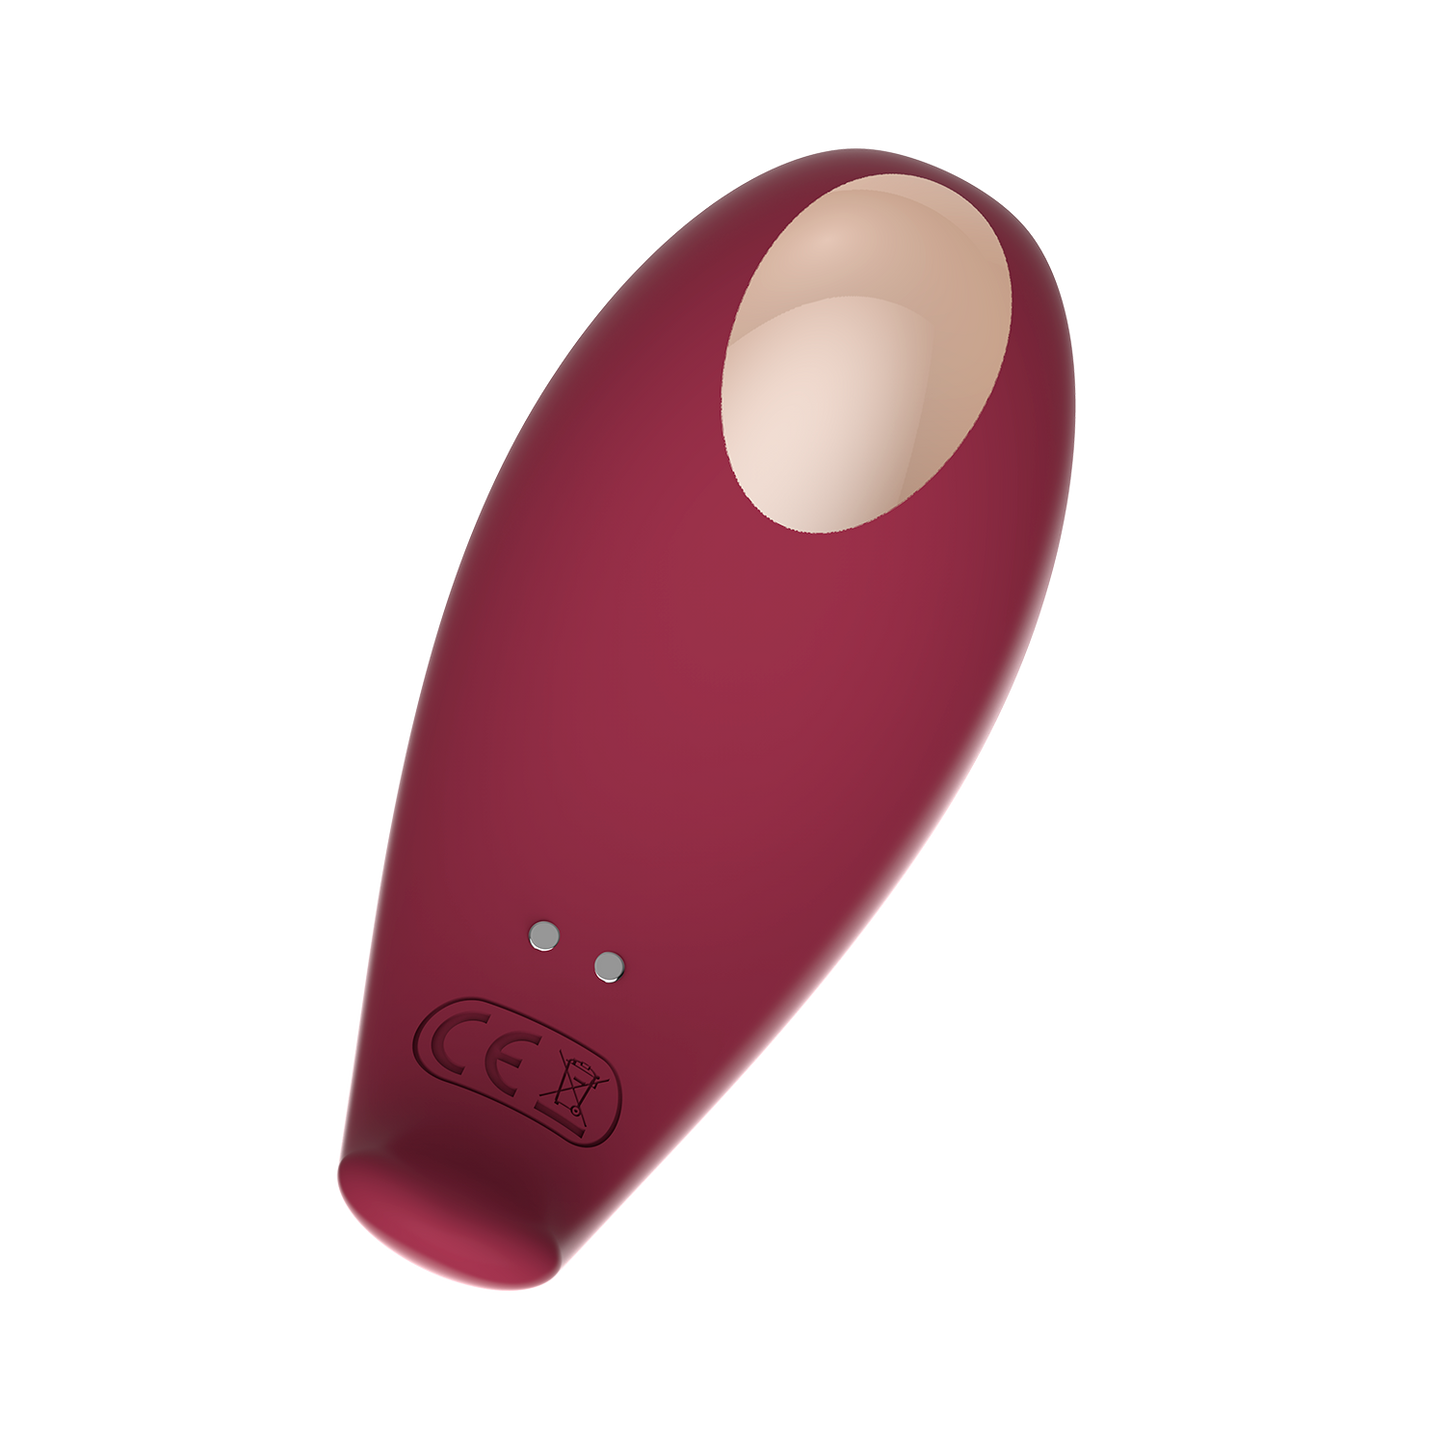 Adrien Lastic Inspiration Vibrating Egg and Air Pulse Vibrator Set